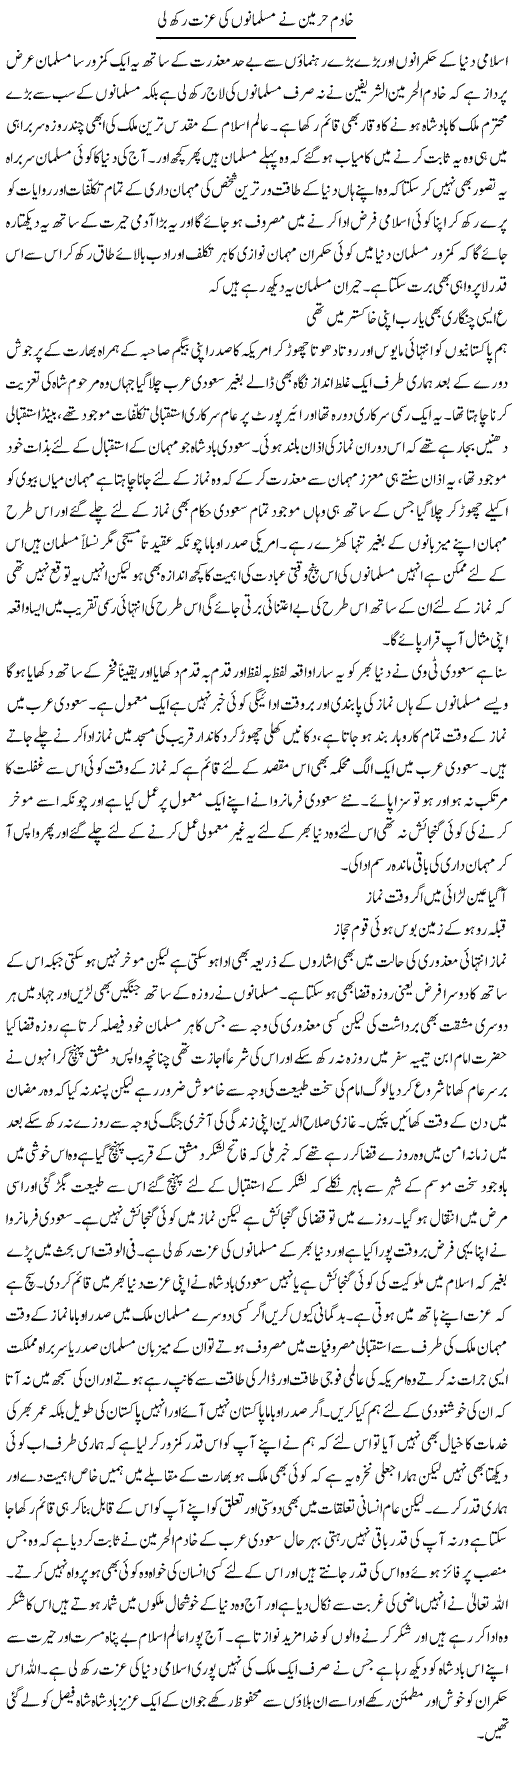 Khadim Harmain Ne Musalmanoon Ki Izzat Rakh Li | Abdul Qadir Hassan | Daily Urdu Columns